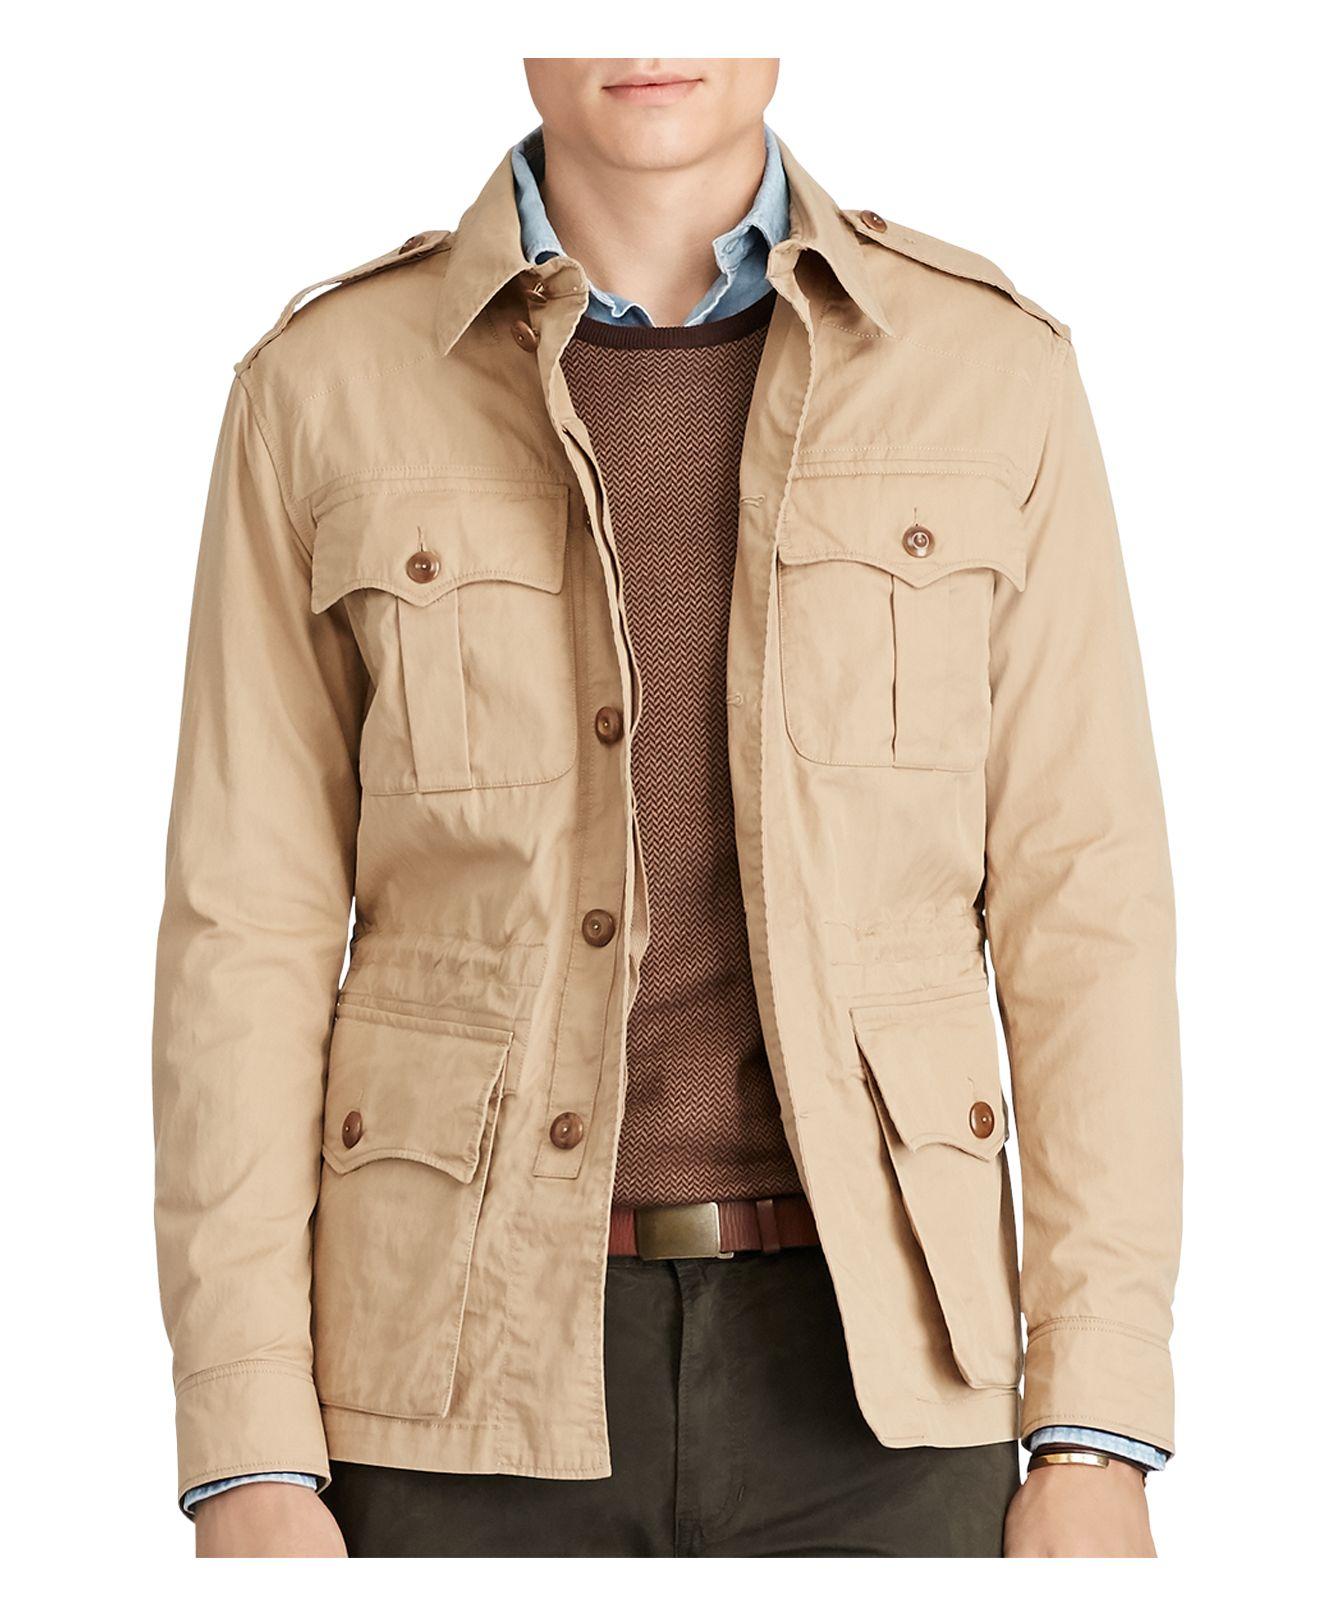 Lyst - Polo Ralph Lauren Cotton Blend Safari Jacket in Natural for Men